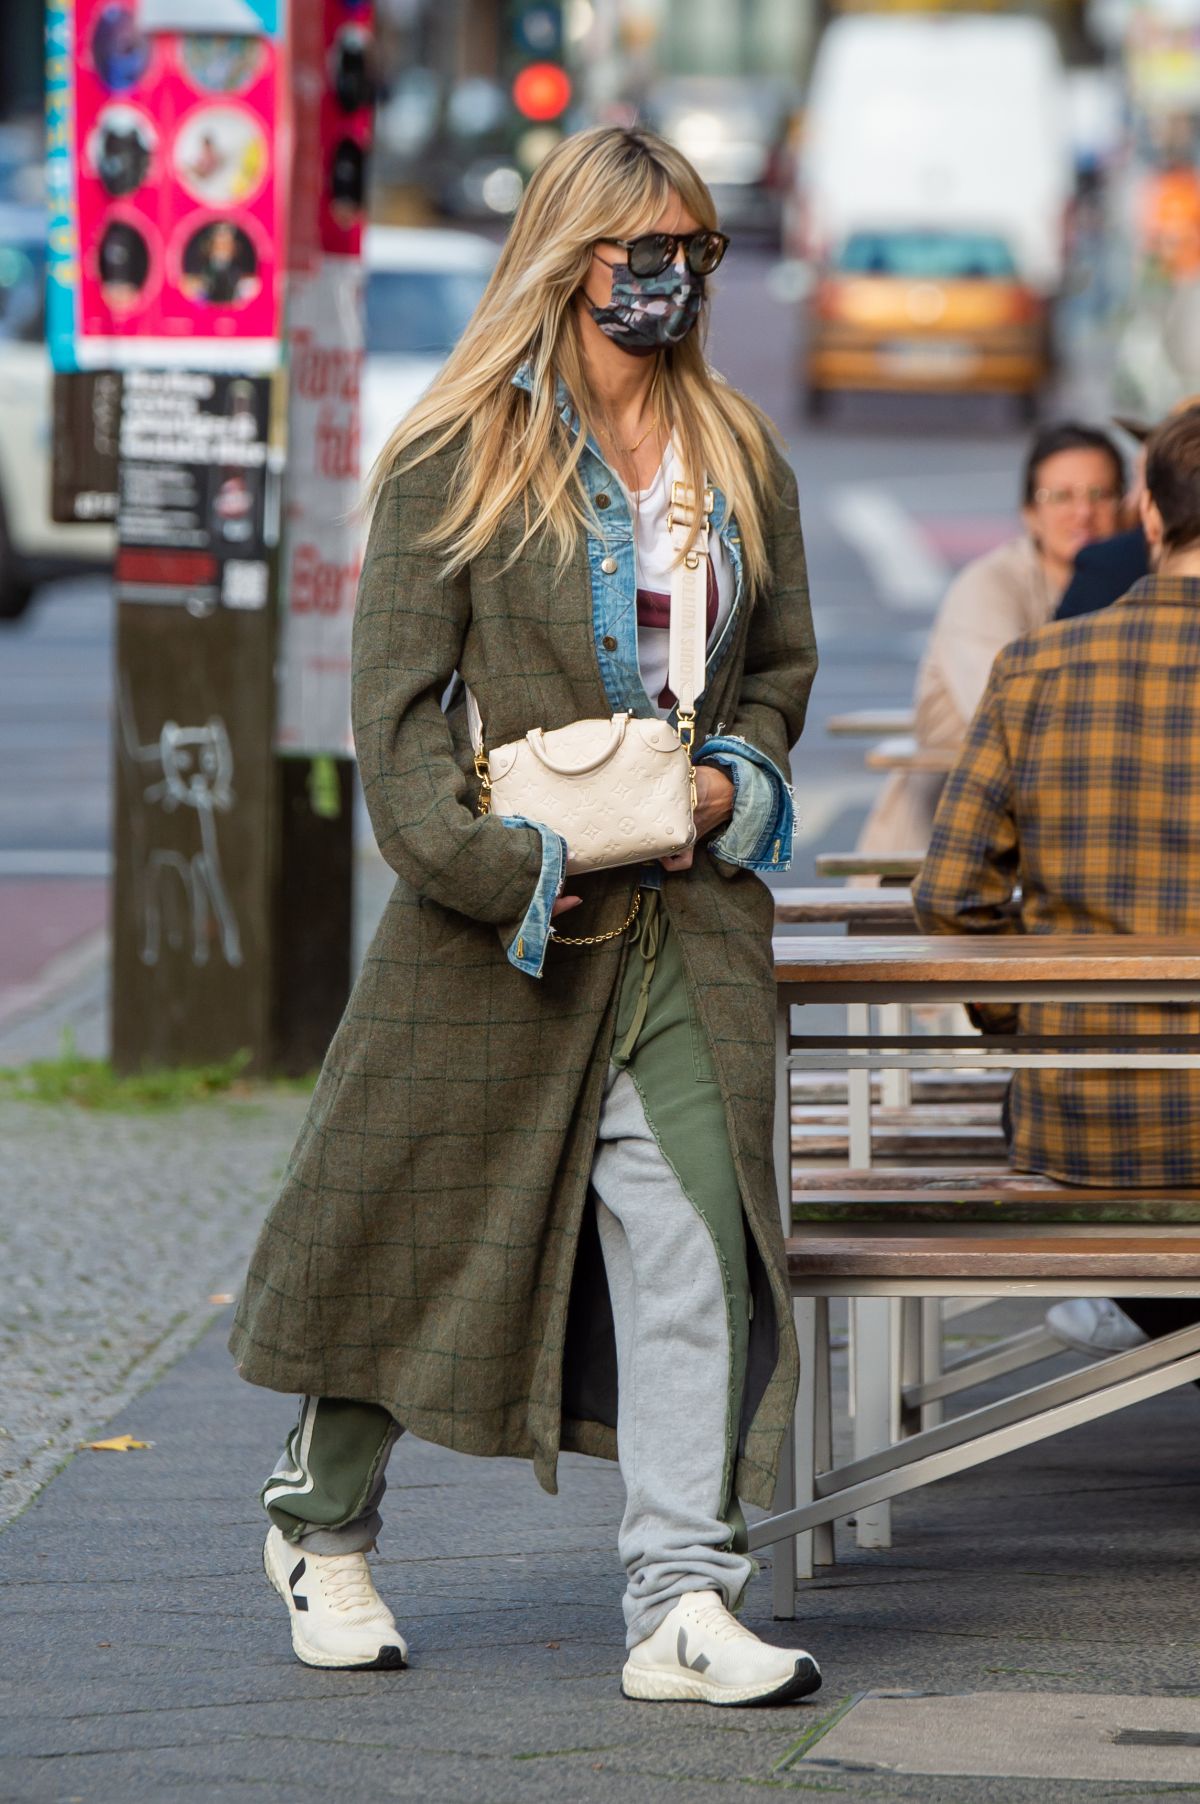 Heidi Klum Berlin October 24, 2020 – Star Style